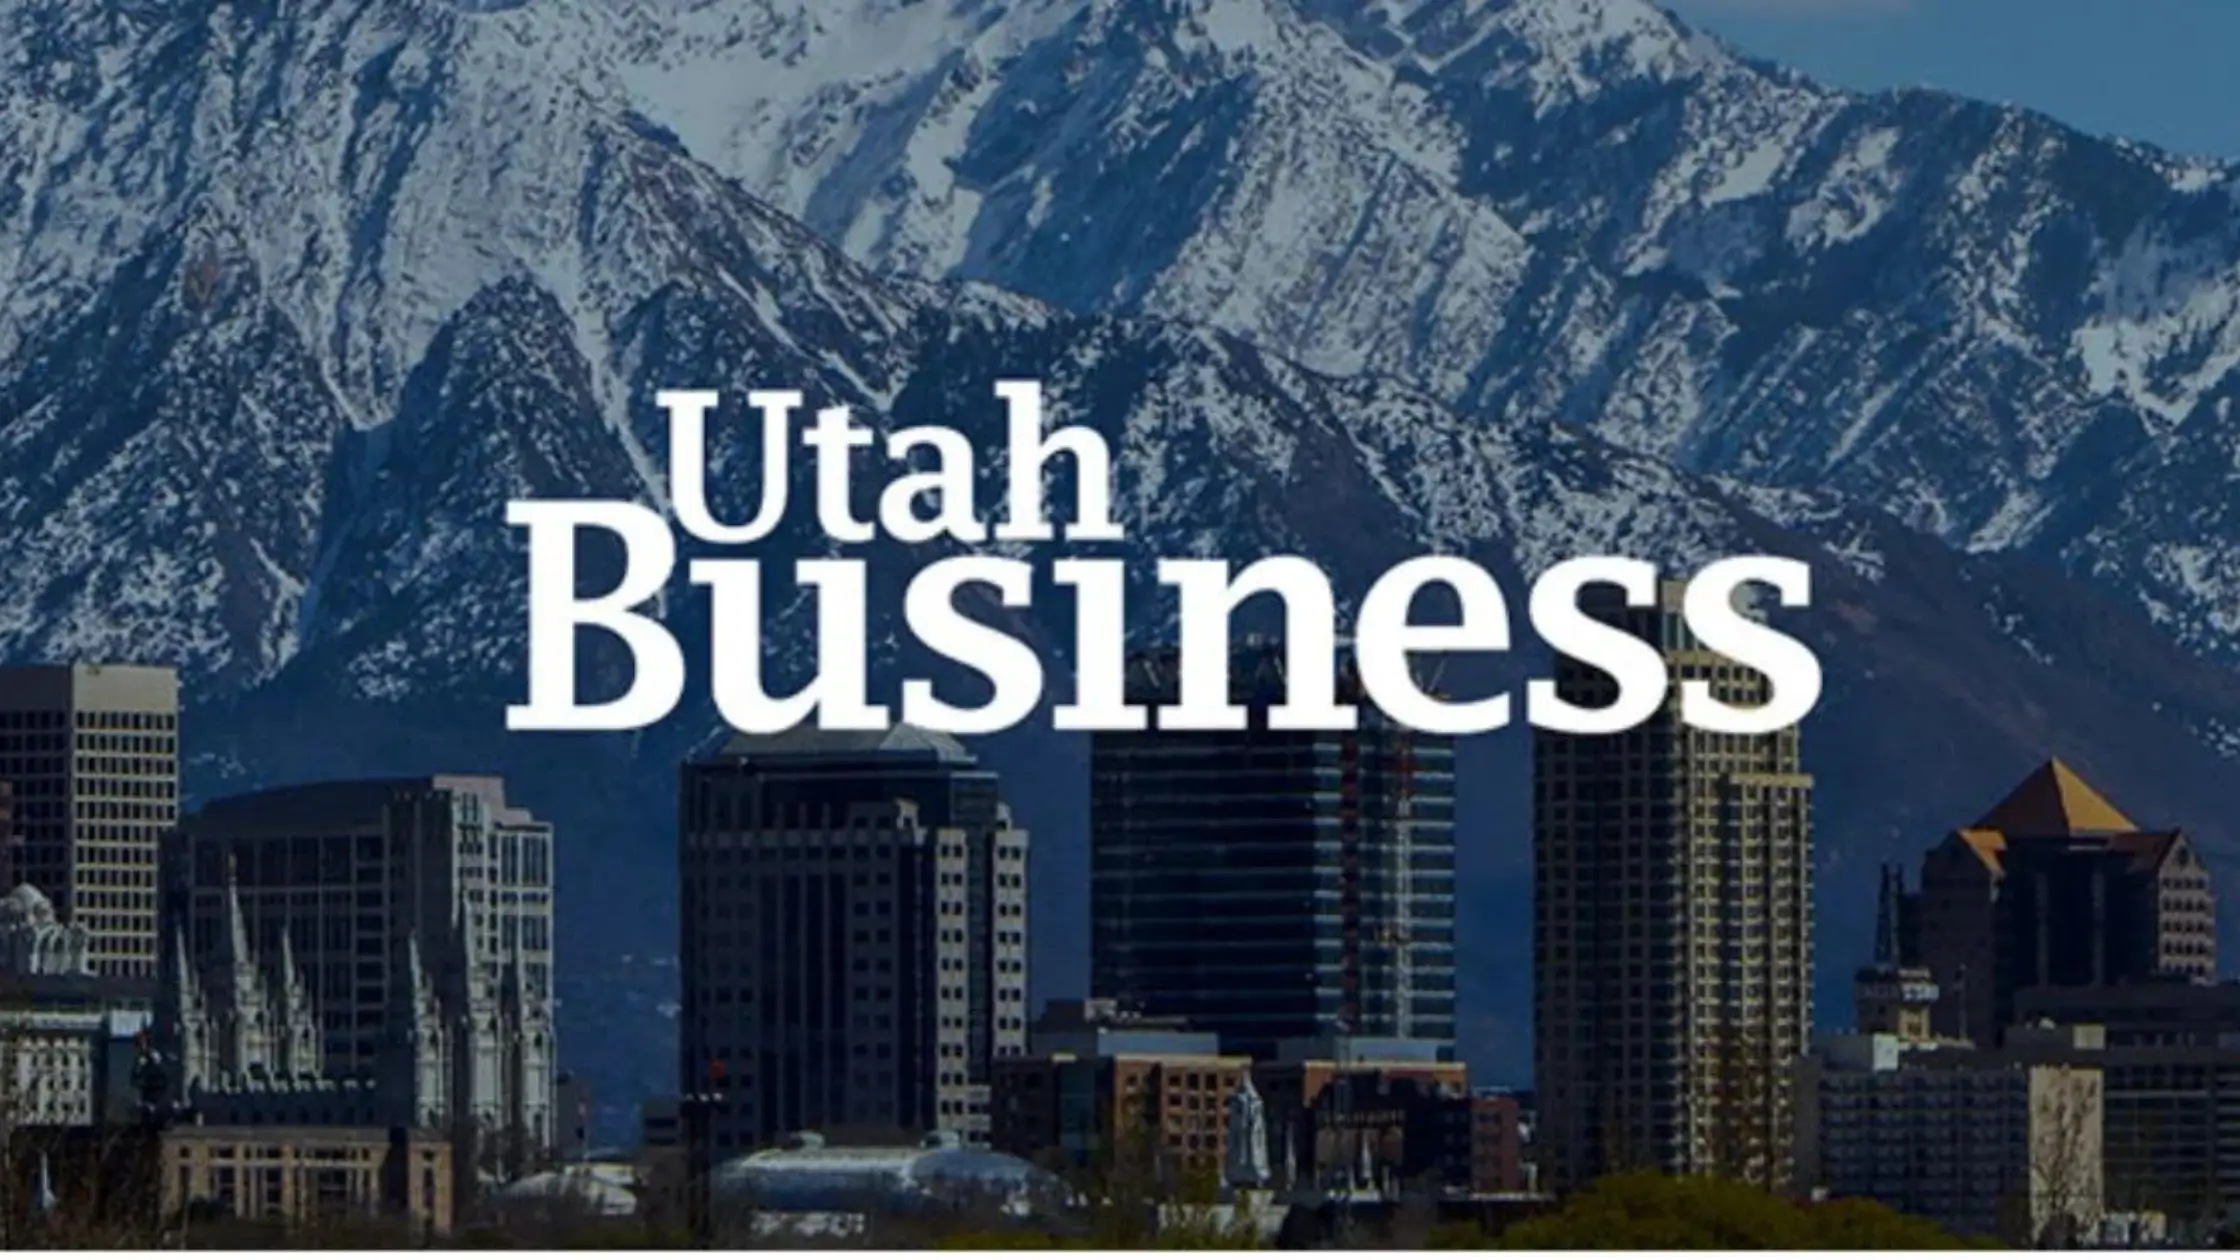 Utah Business Entity